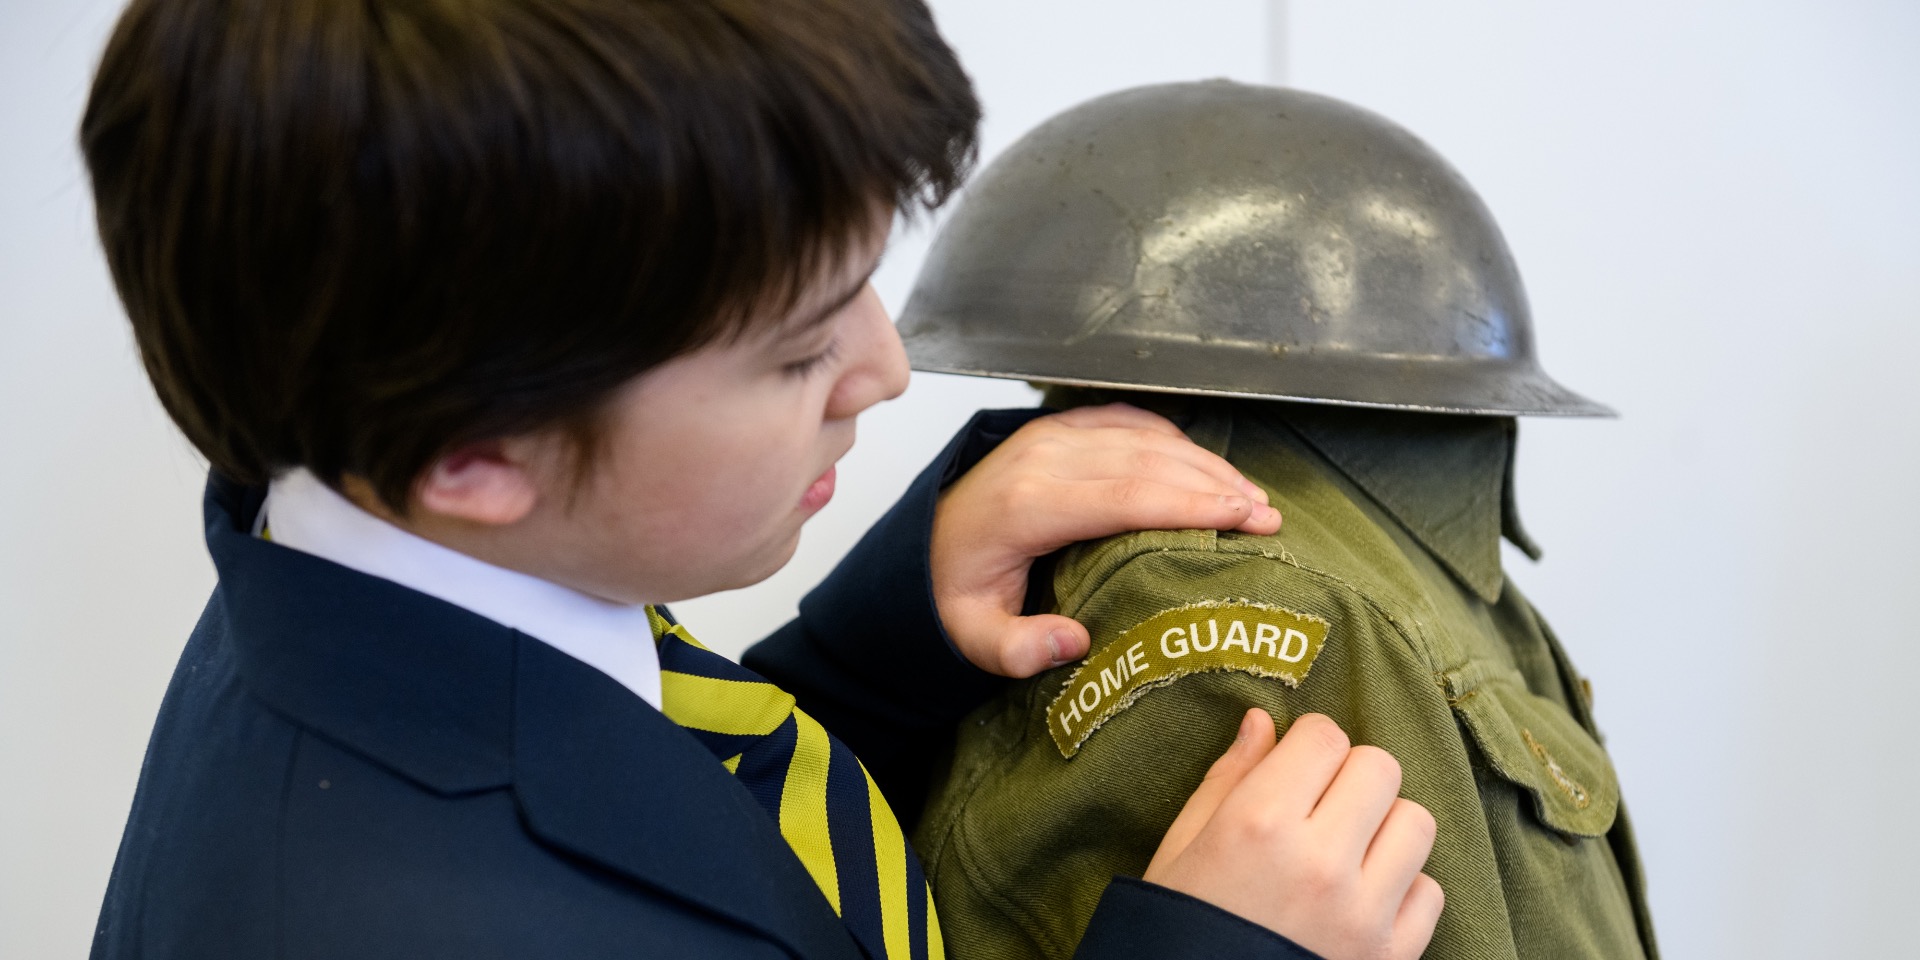 School boy examining a Home Guard uniform